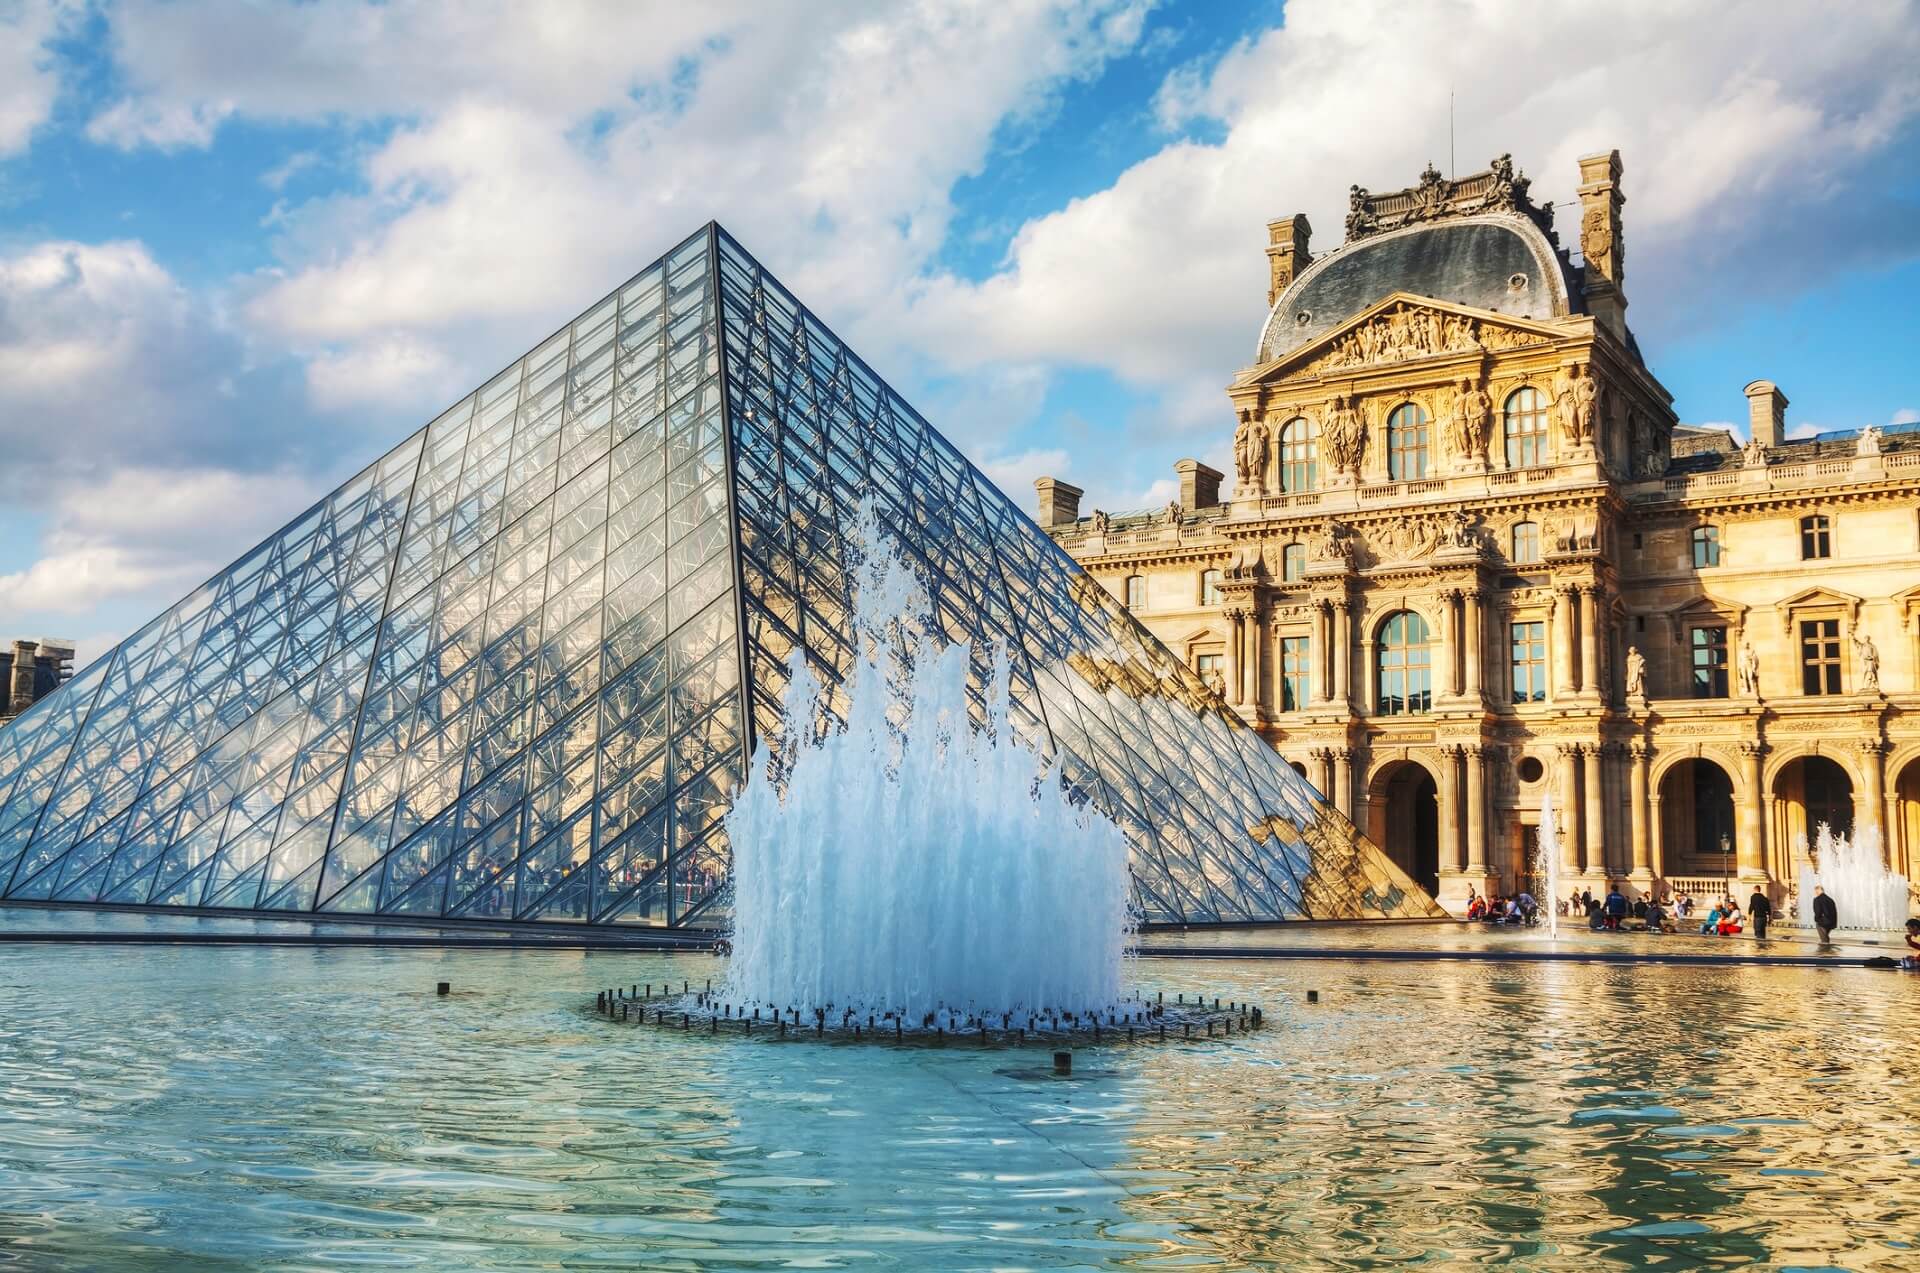 EDITORIAL ONLY AndreyKrav. Die Glaspyramide Des Louvre In Paris IStock 523455871 1 